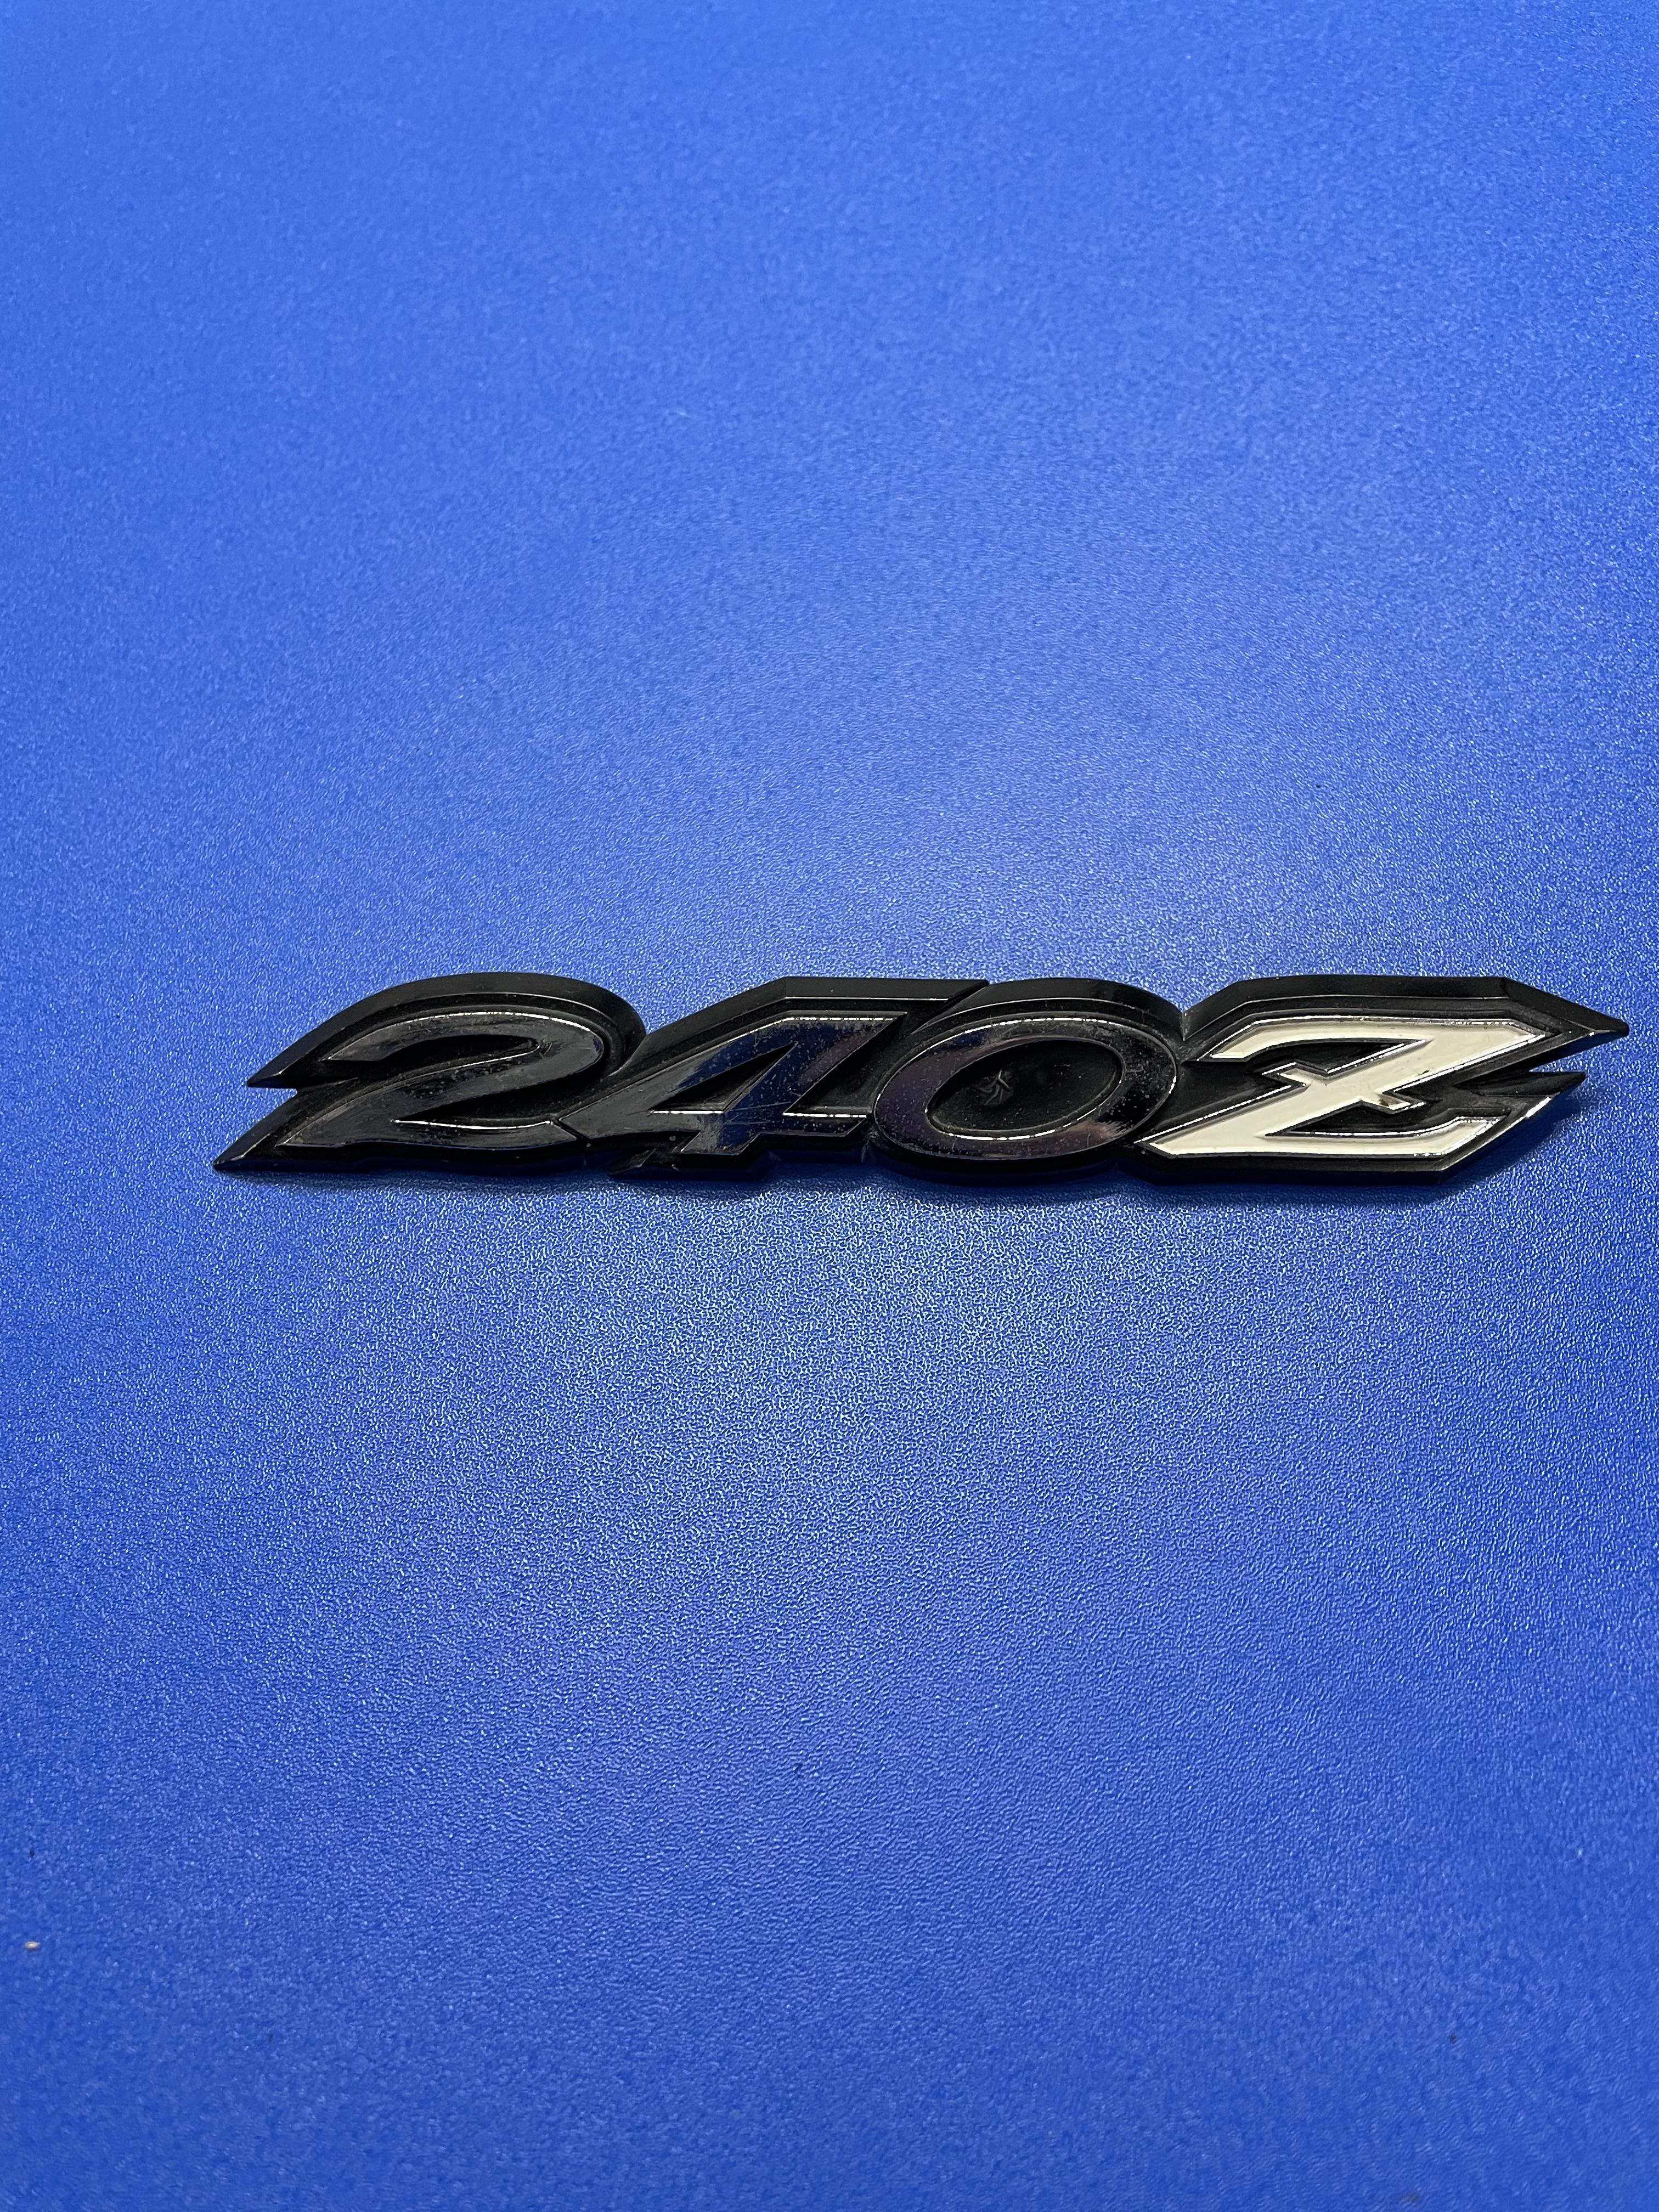 Datsun 240z parts